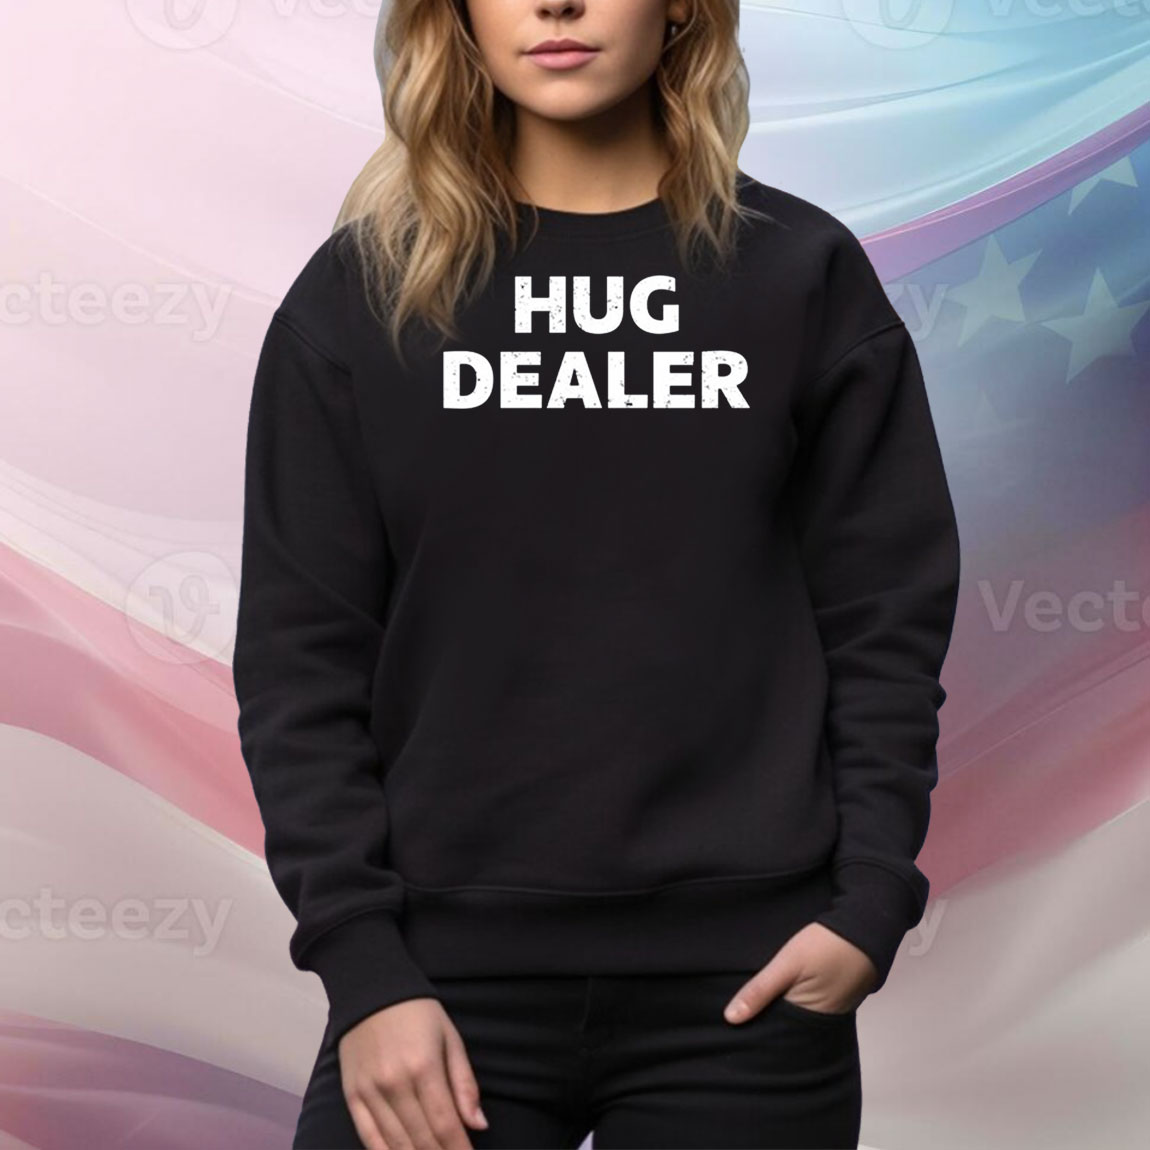 Profgampo Hug Dealer Hoodie Shirts